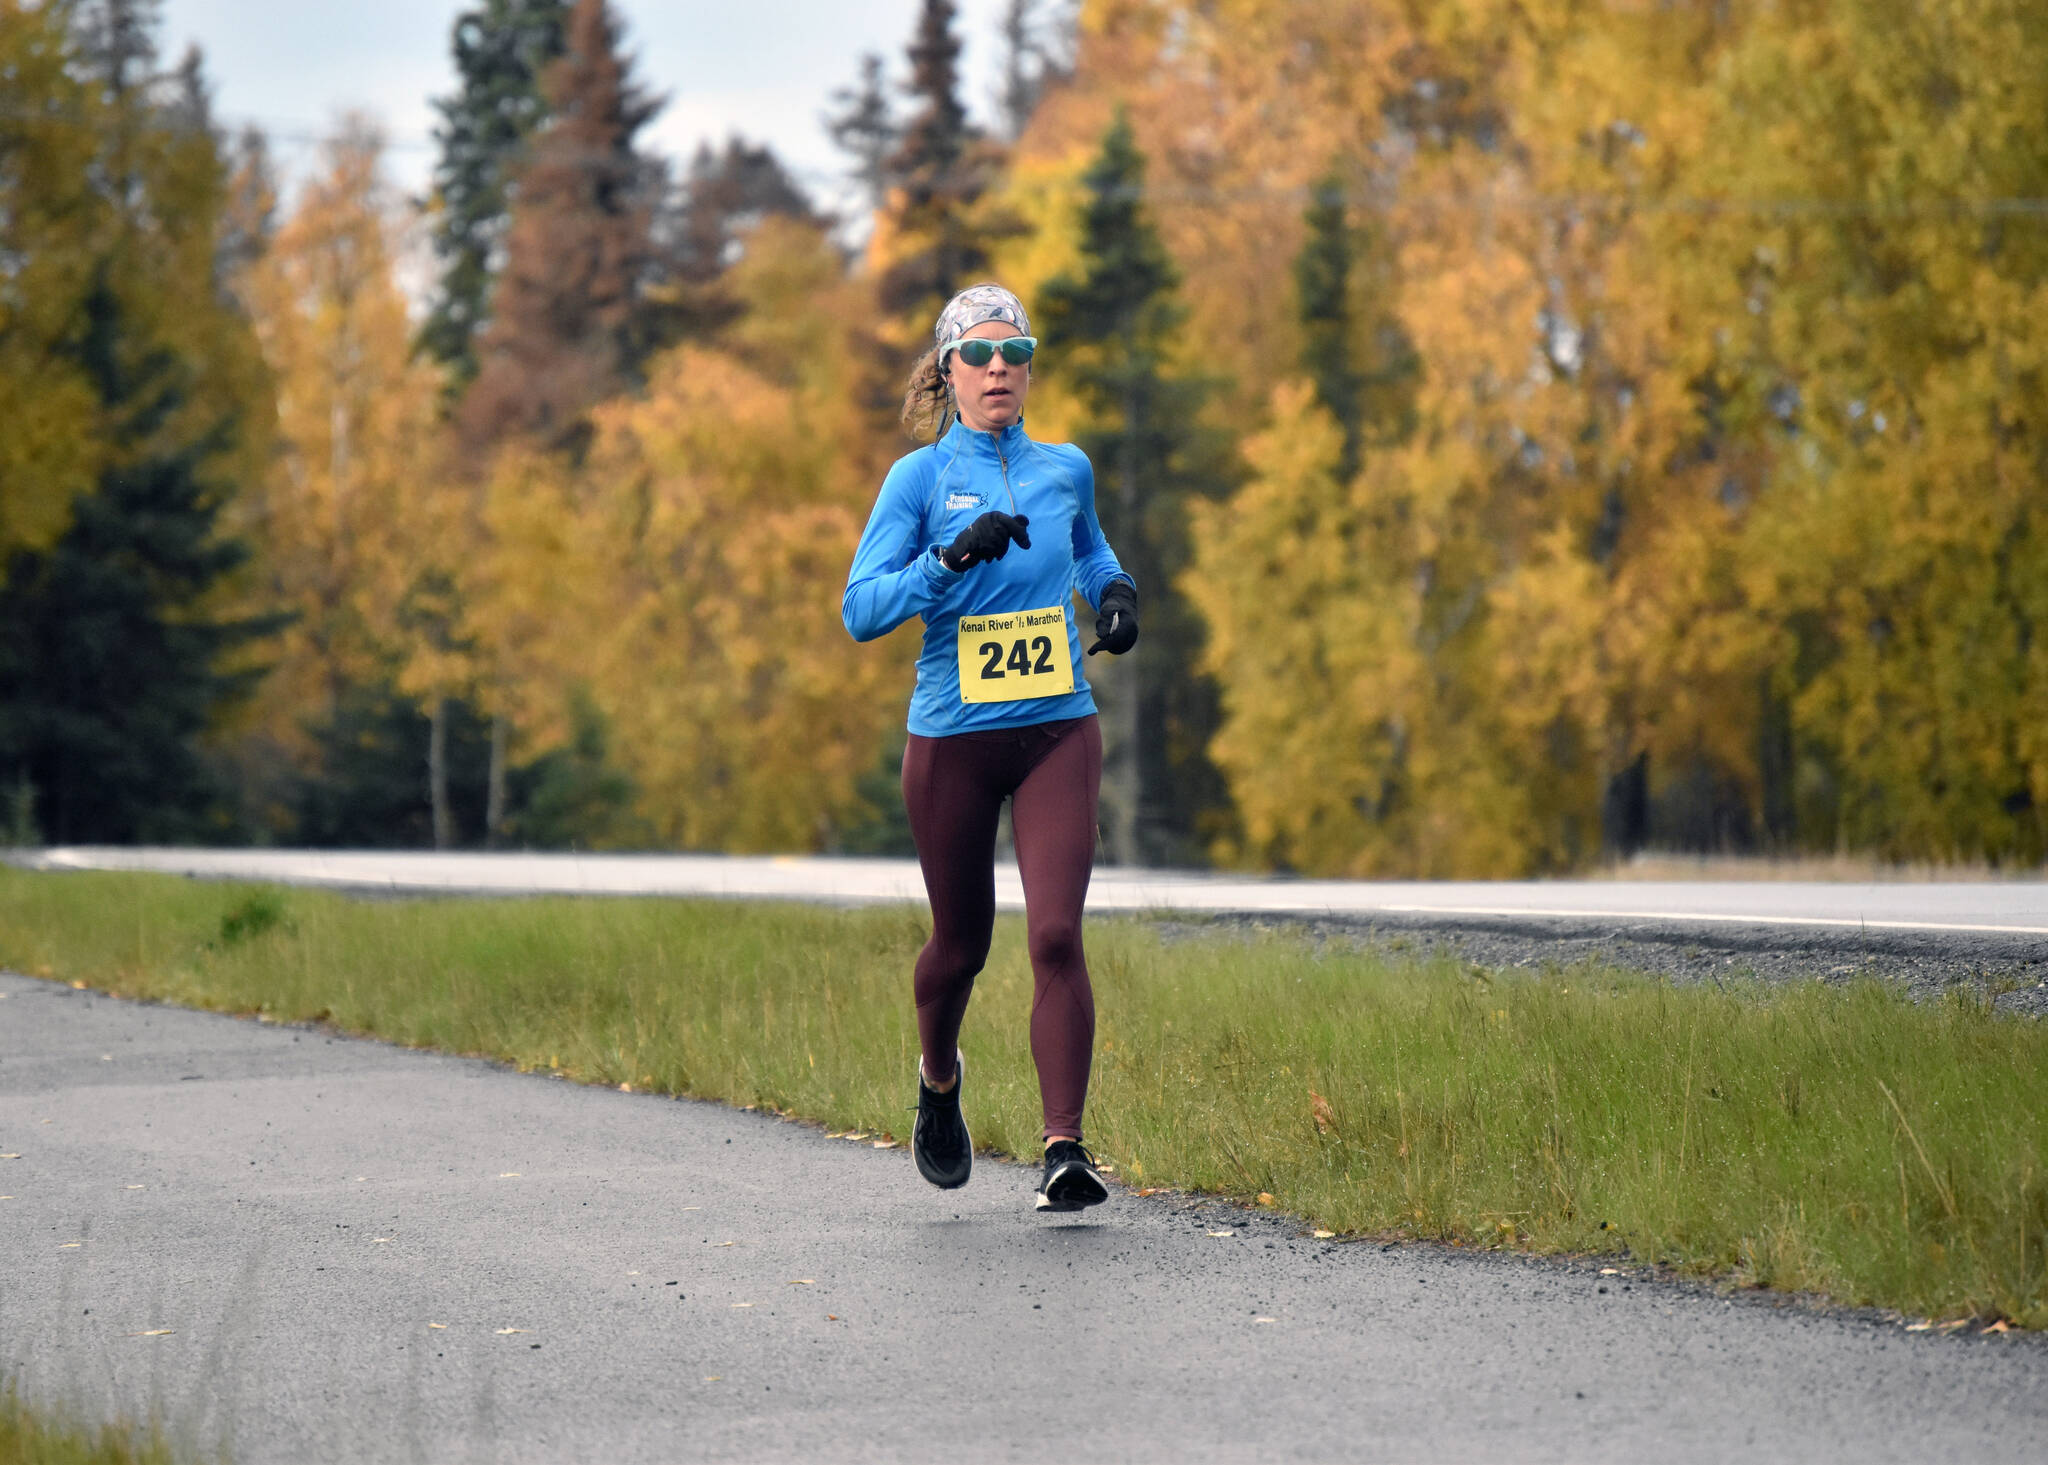 Kristin Davis runs to victory in the women’s half marathon in the Kenai River Marathon on Sunday, Sept. 25, 2022, in Kenai, Alaska. (Photo by Jeff Helminiak/Peninsula Clarion)